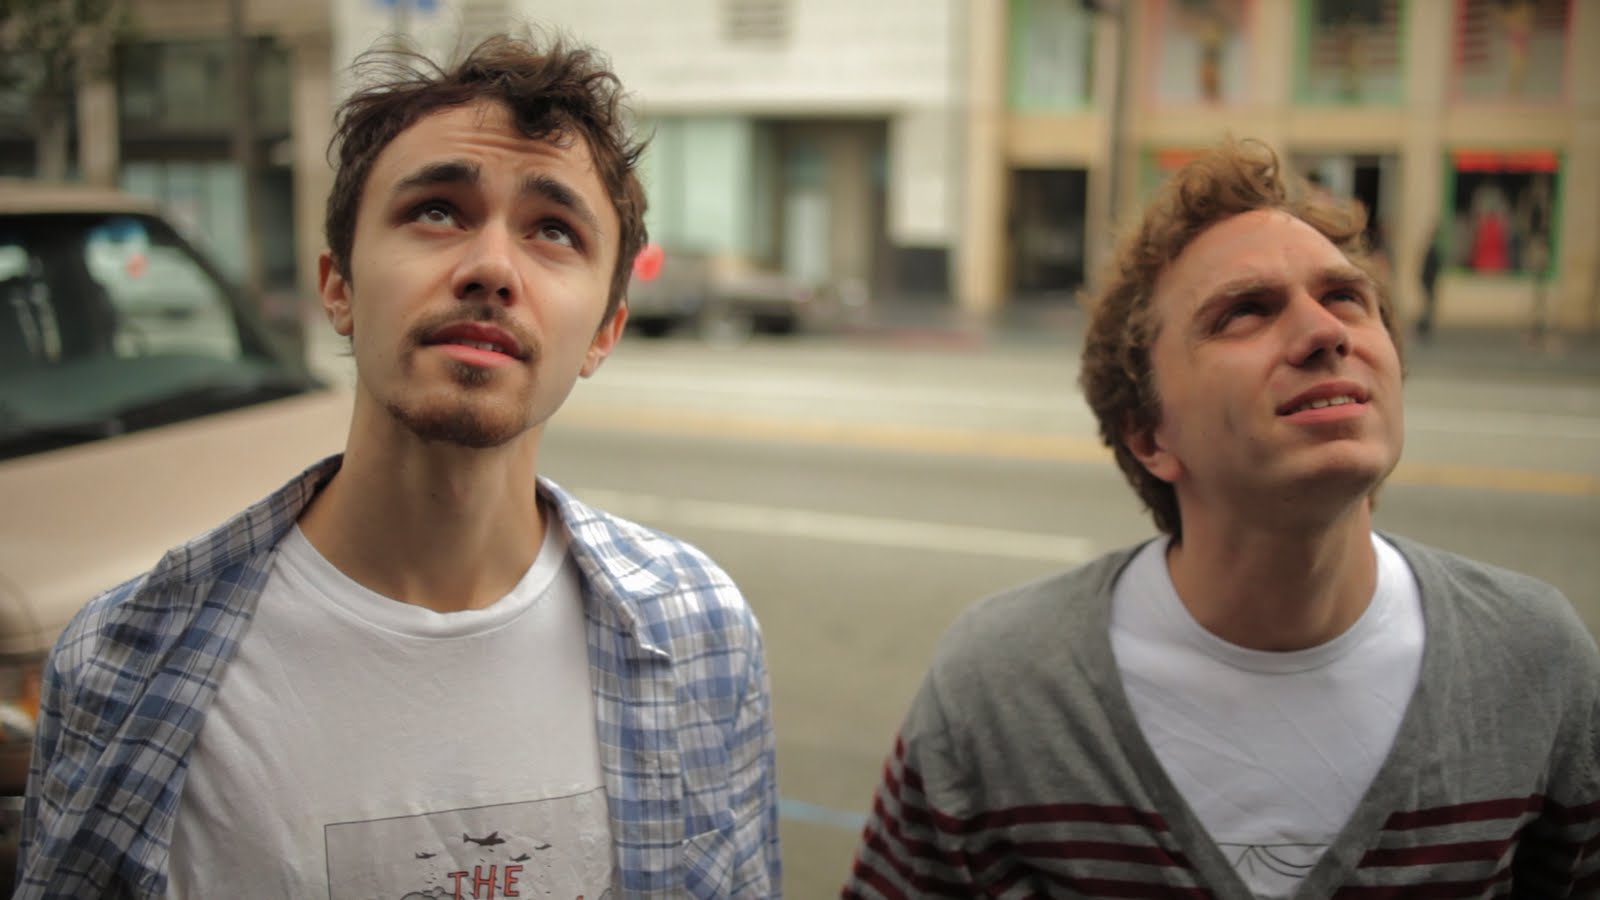 Jordan Castro and Noah Cicero in "Shoplifting from American Apparel" (2012).